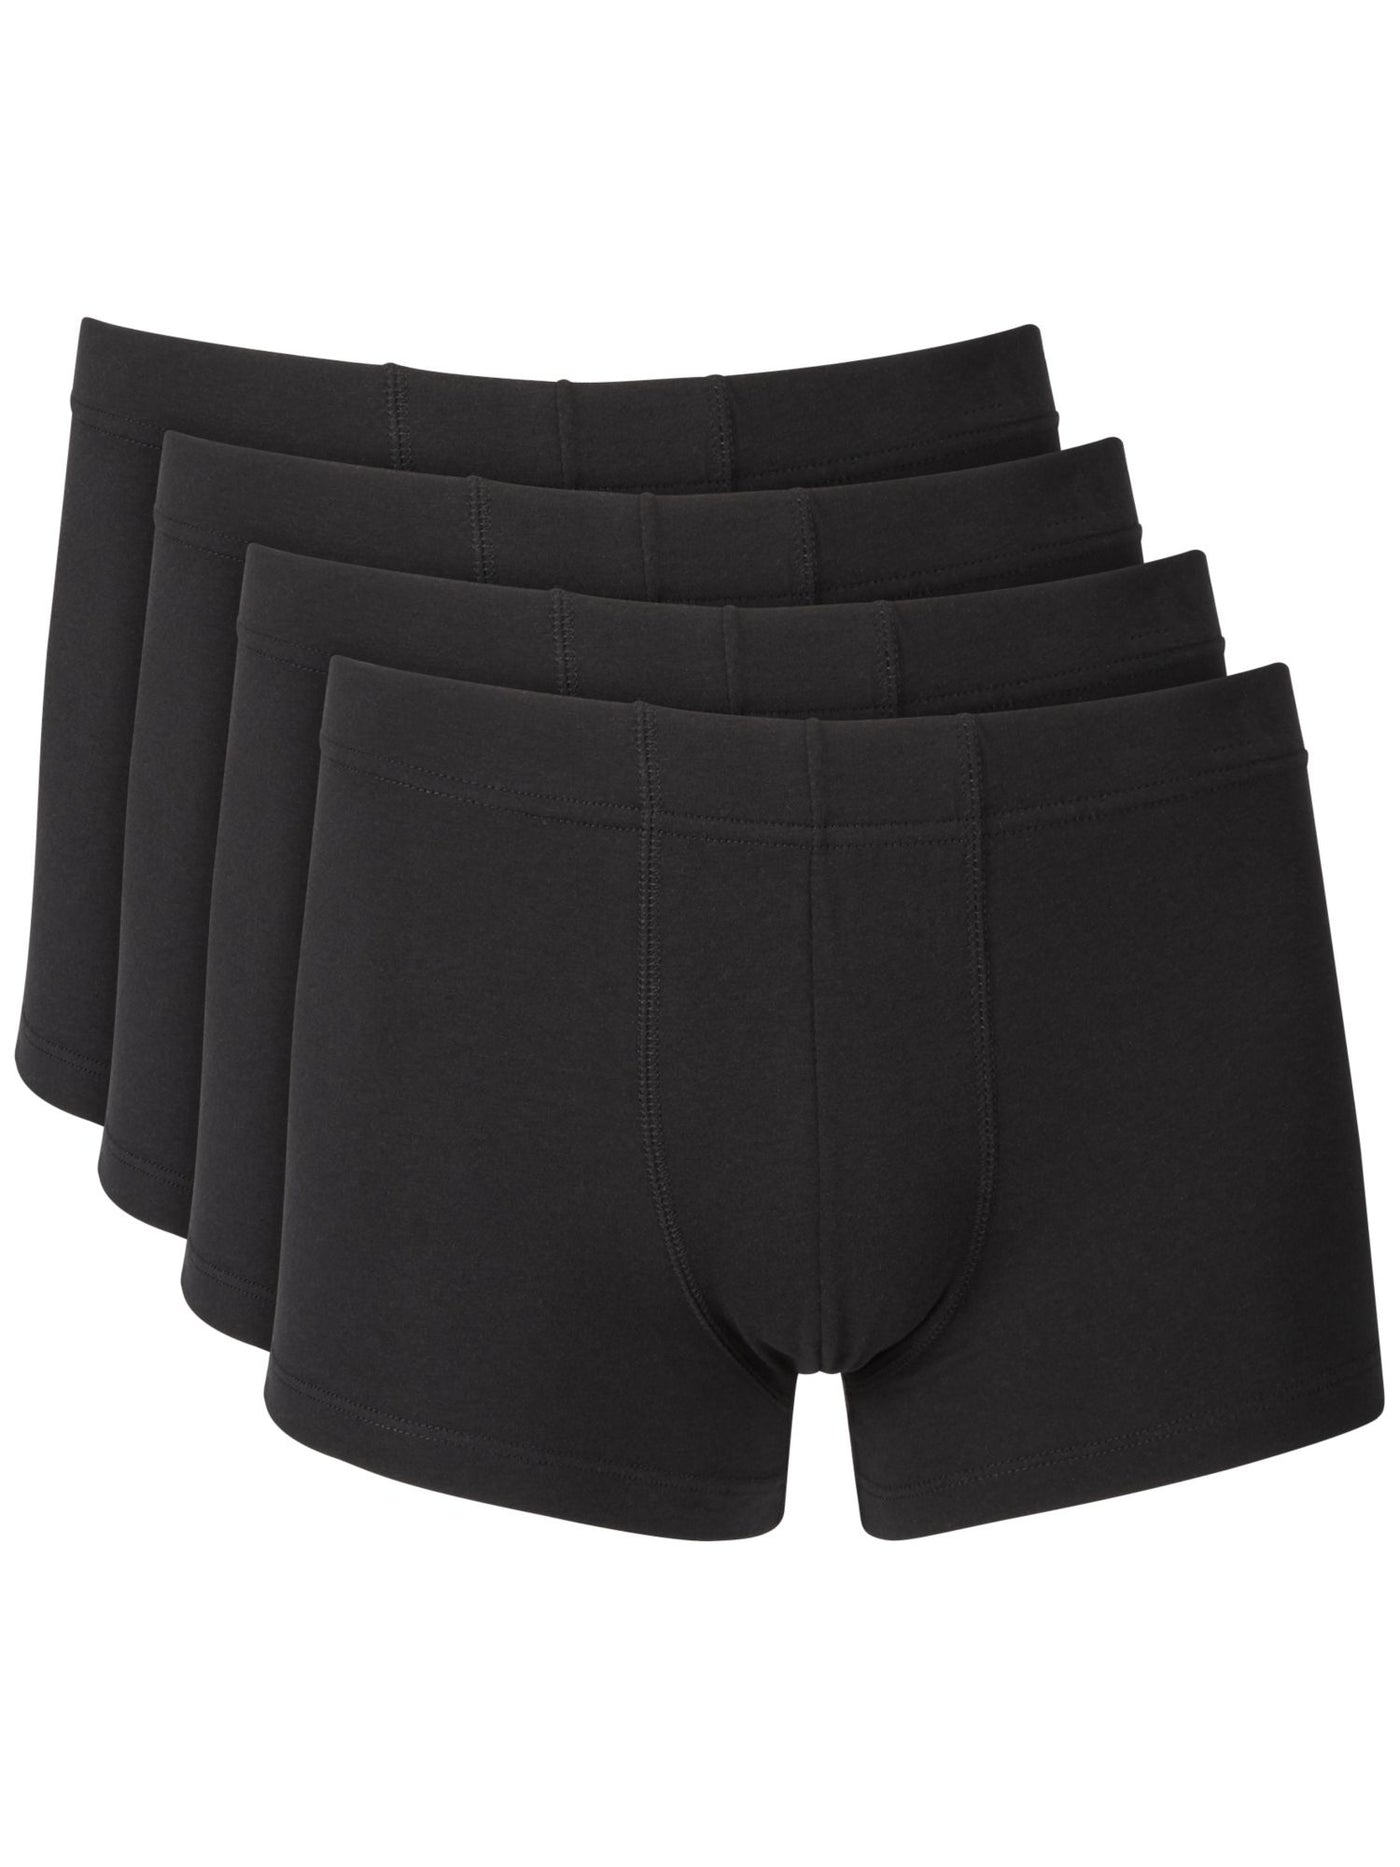 ALFATECH BY ALFANI Intimates 4 Pack Black Cotton Blend Boxer Brief Underwear S